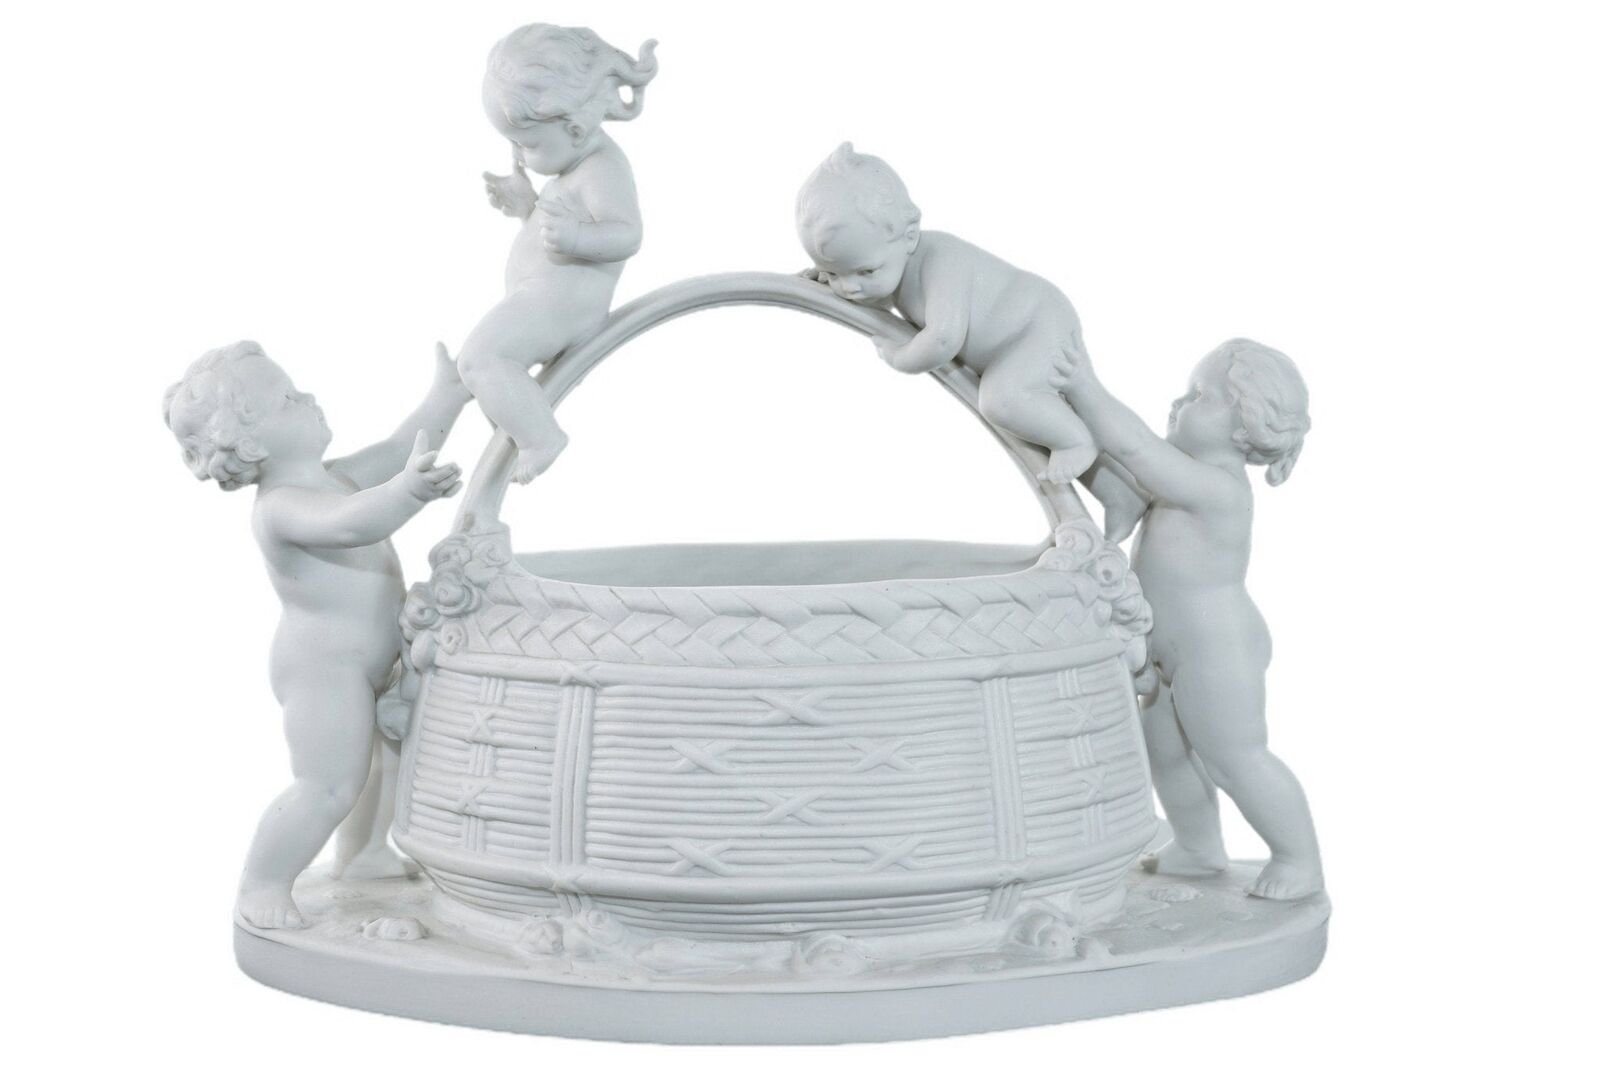 Antique Hertwig Parian Ware Porcelain centerpiece with cherubs